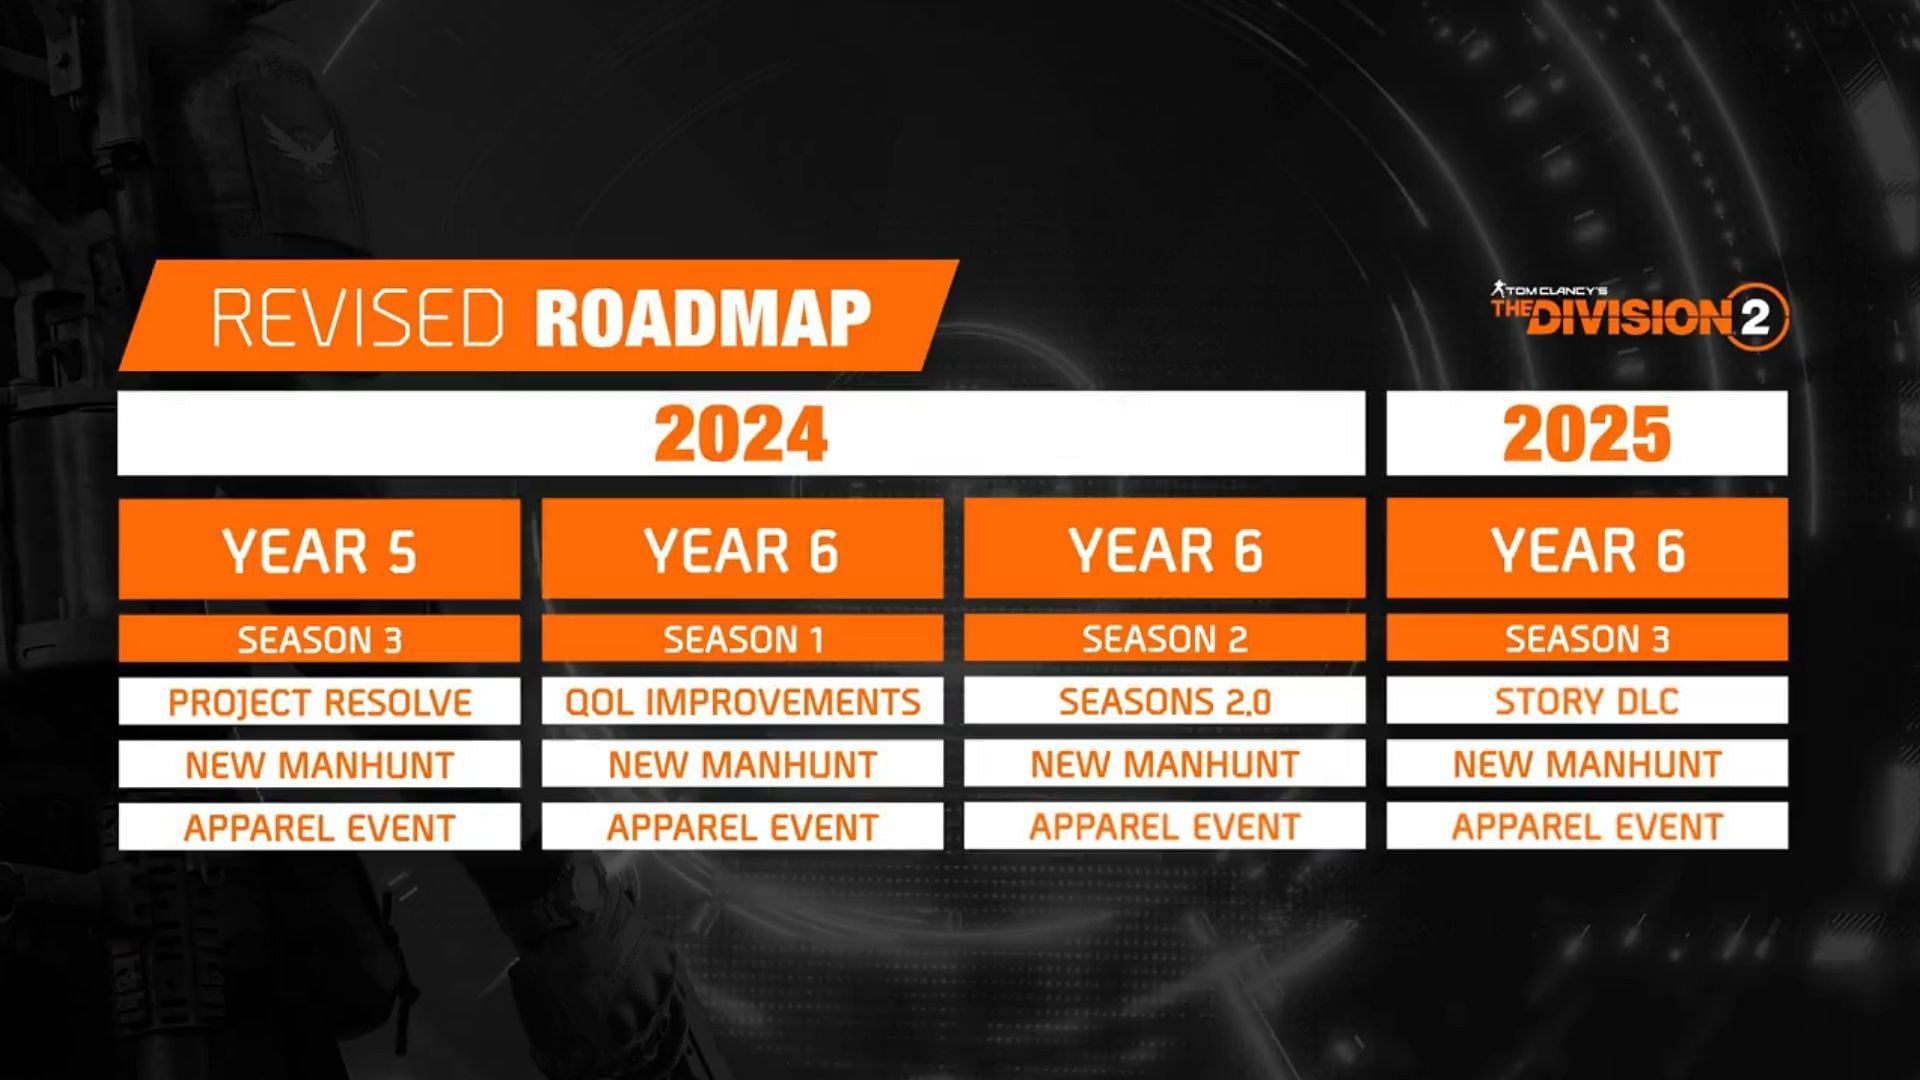 Year 5 to Year 6 roadmap (Image via Ubisoft)